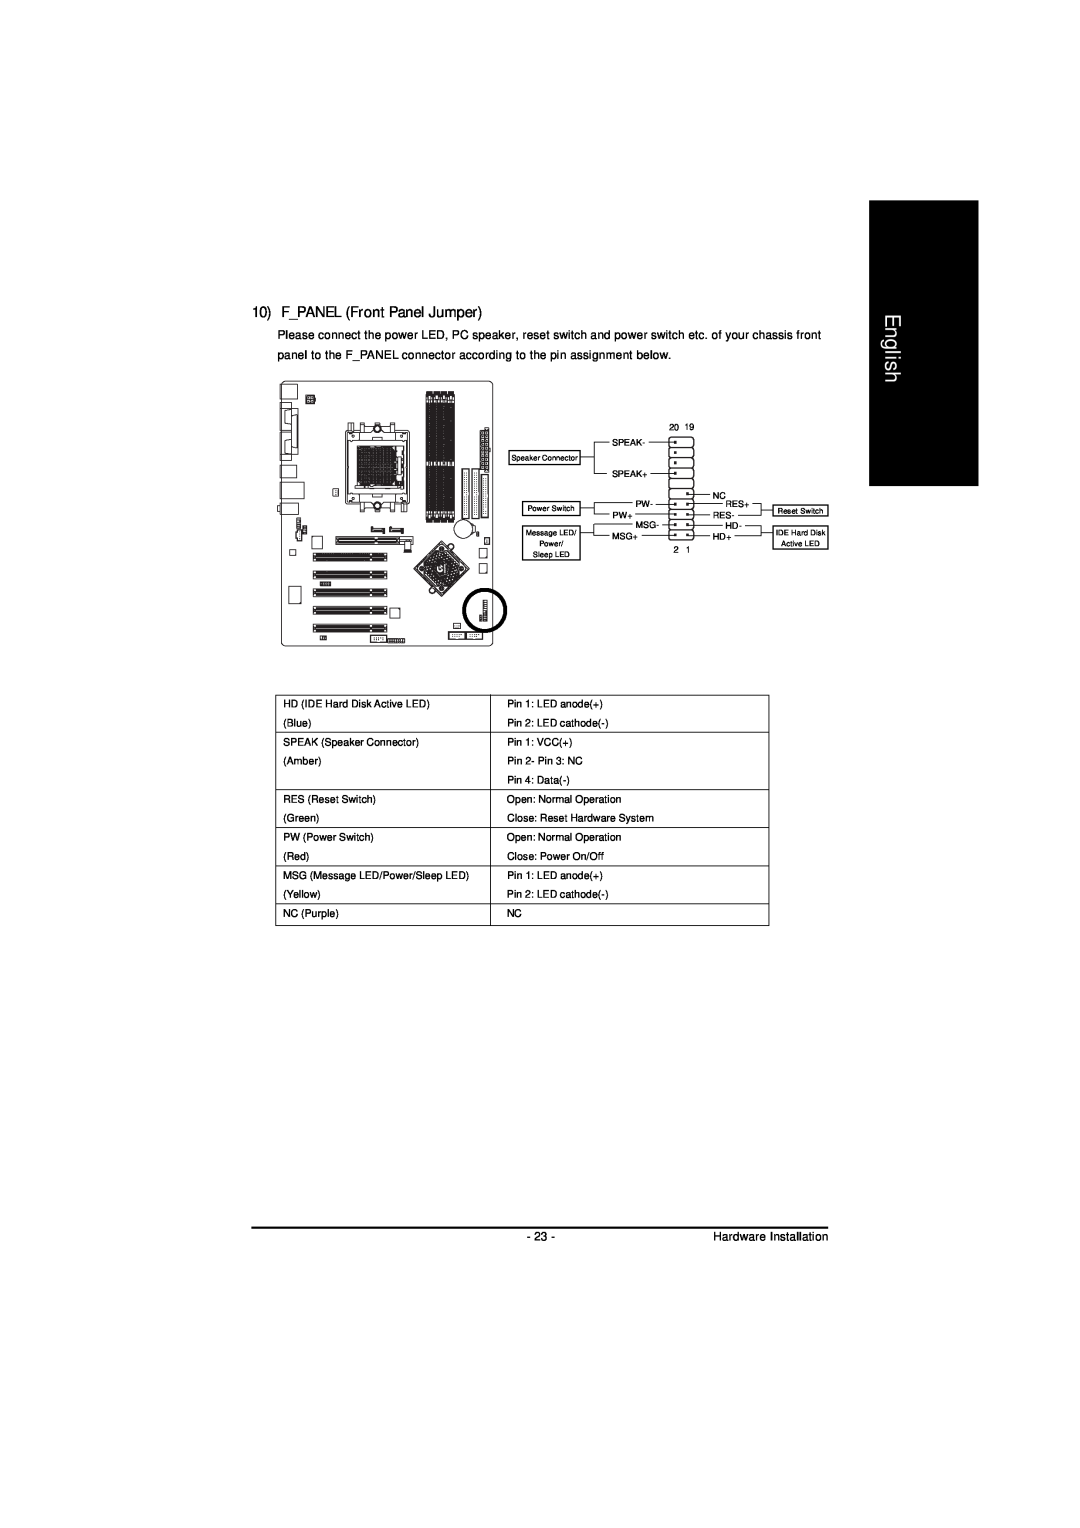 AMD GA-K8NS-939, GA-K8NS PRO-939 user manual FPANEL Front Panel Jumper, English, Speaker Connector, Res+, Msg+, Reset Switch 